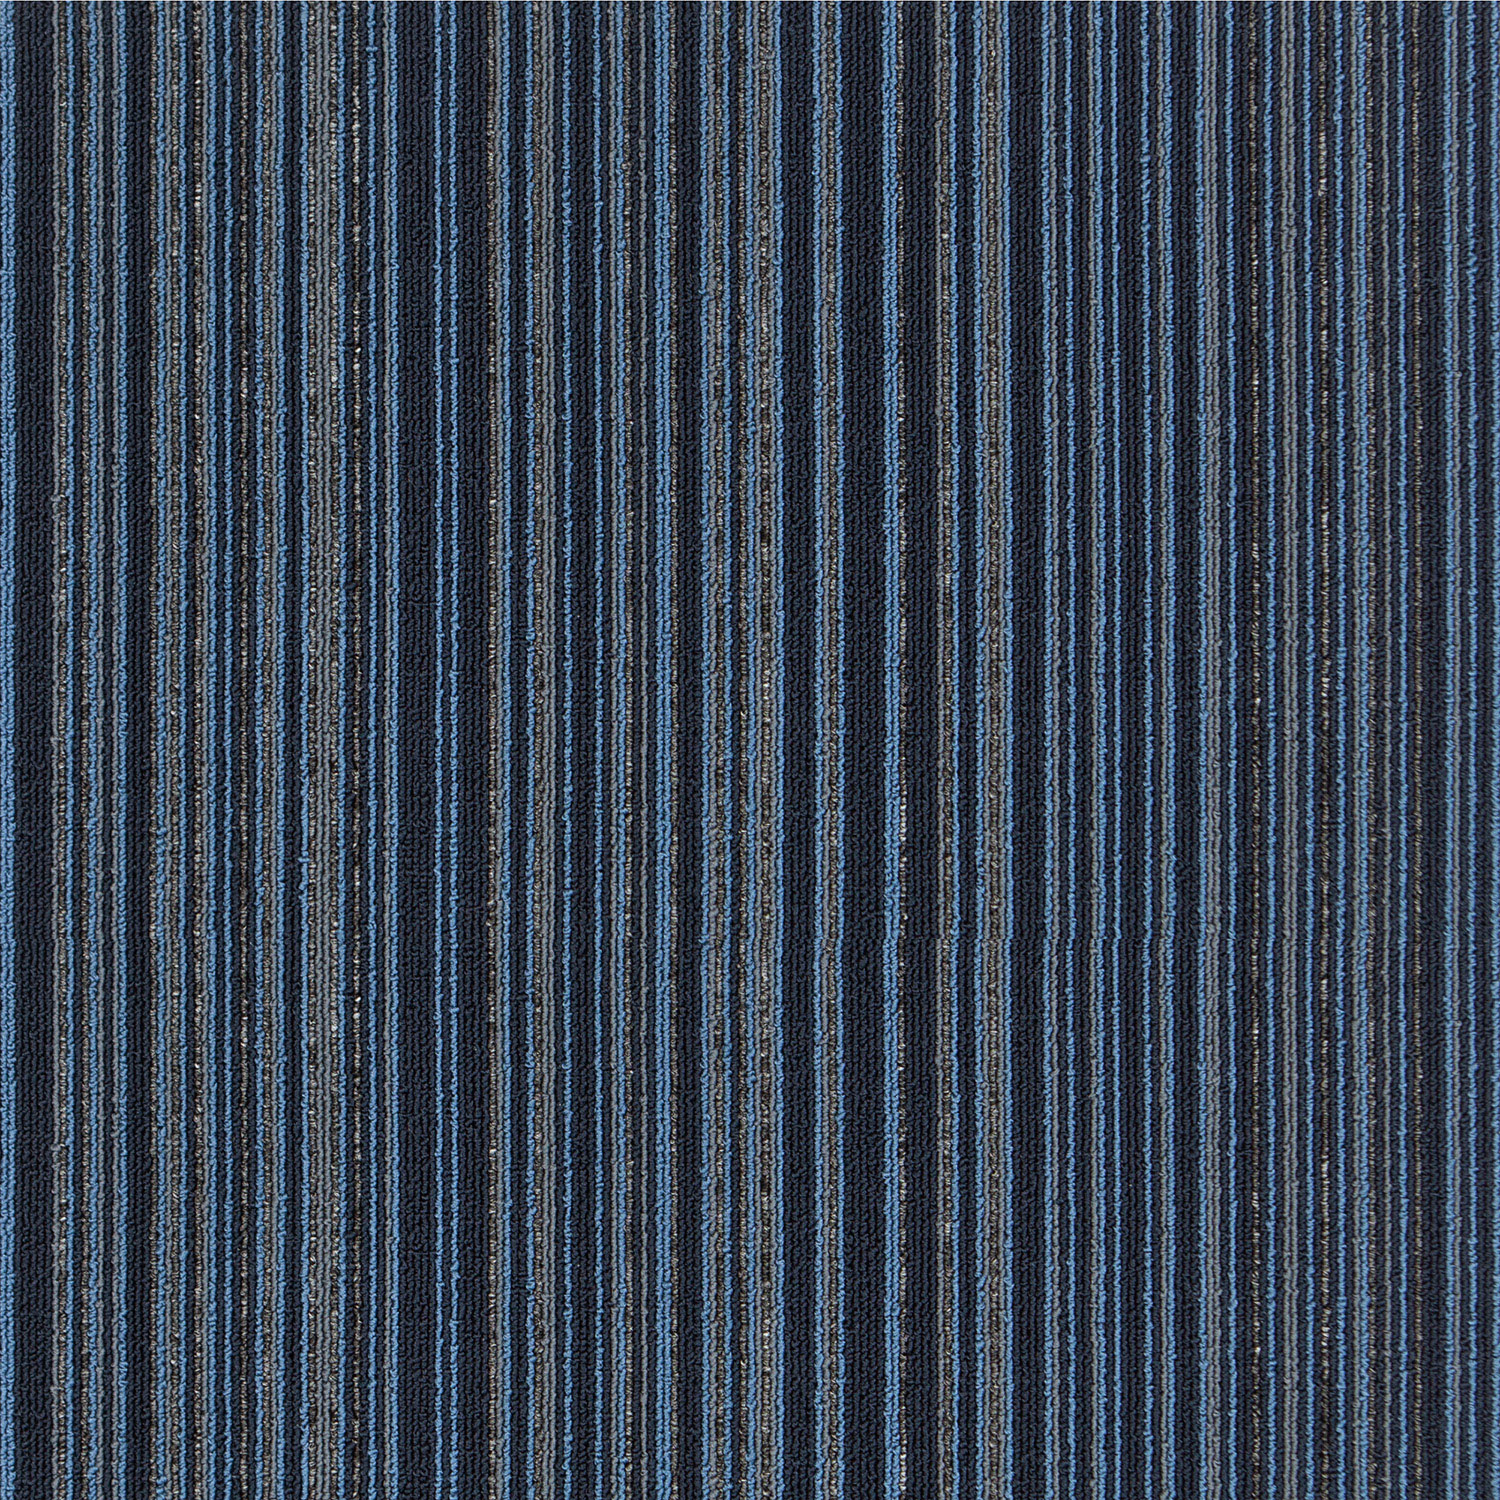 TACK211 Shanghai OEM Stain Resistant Carpet Tiles Factory